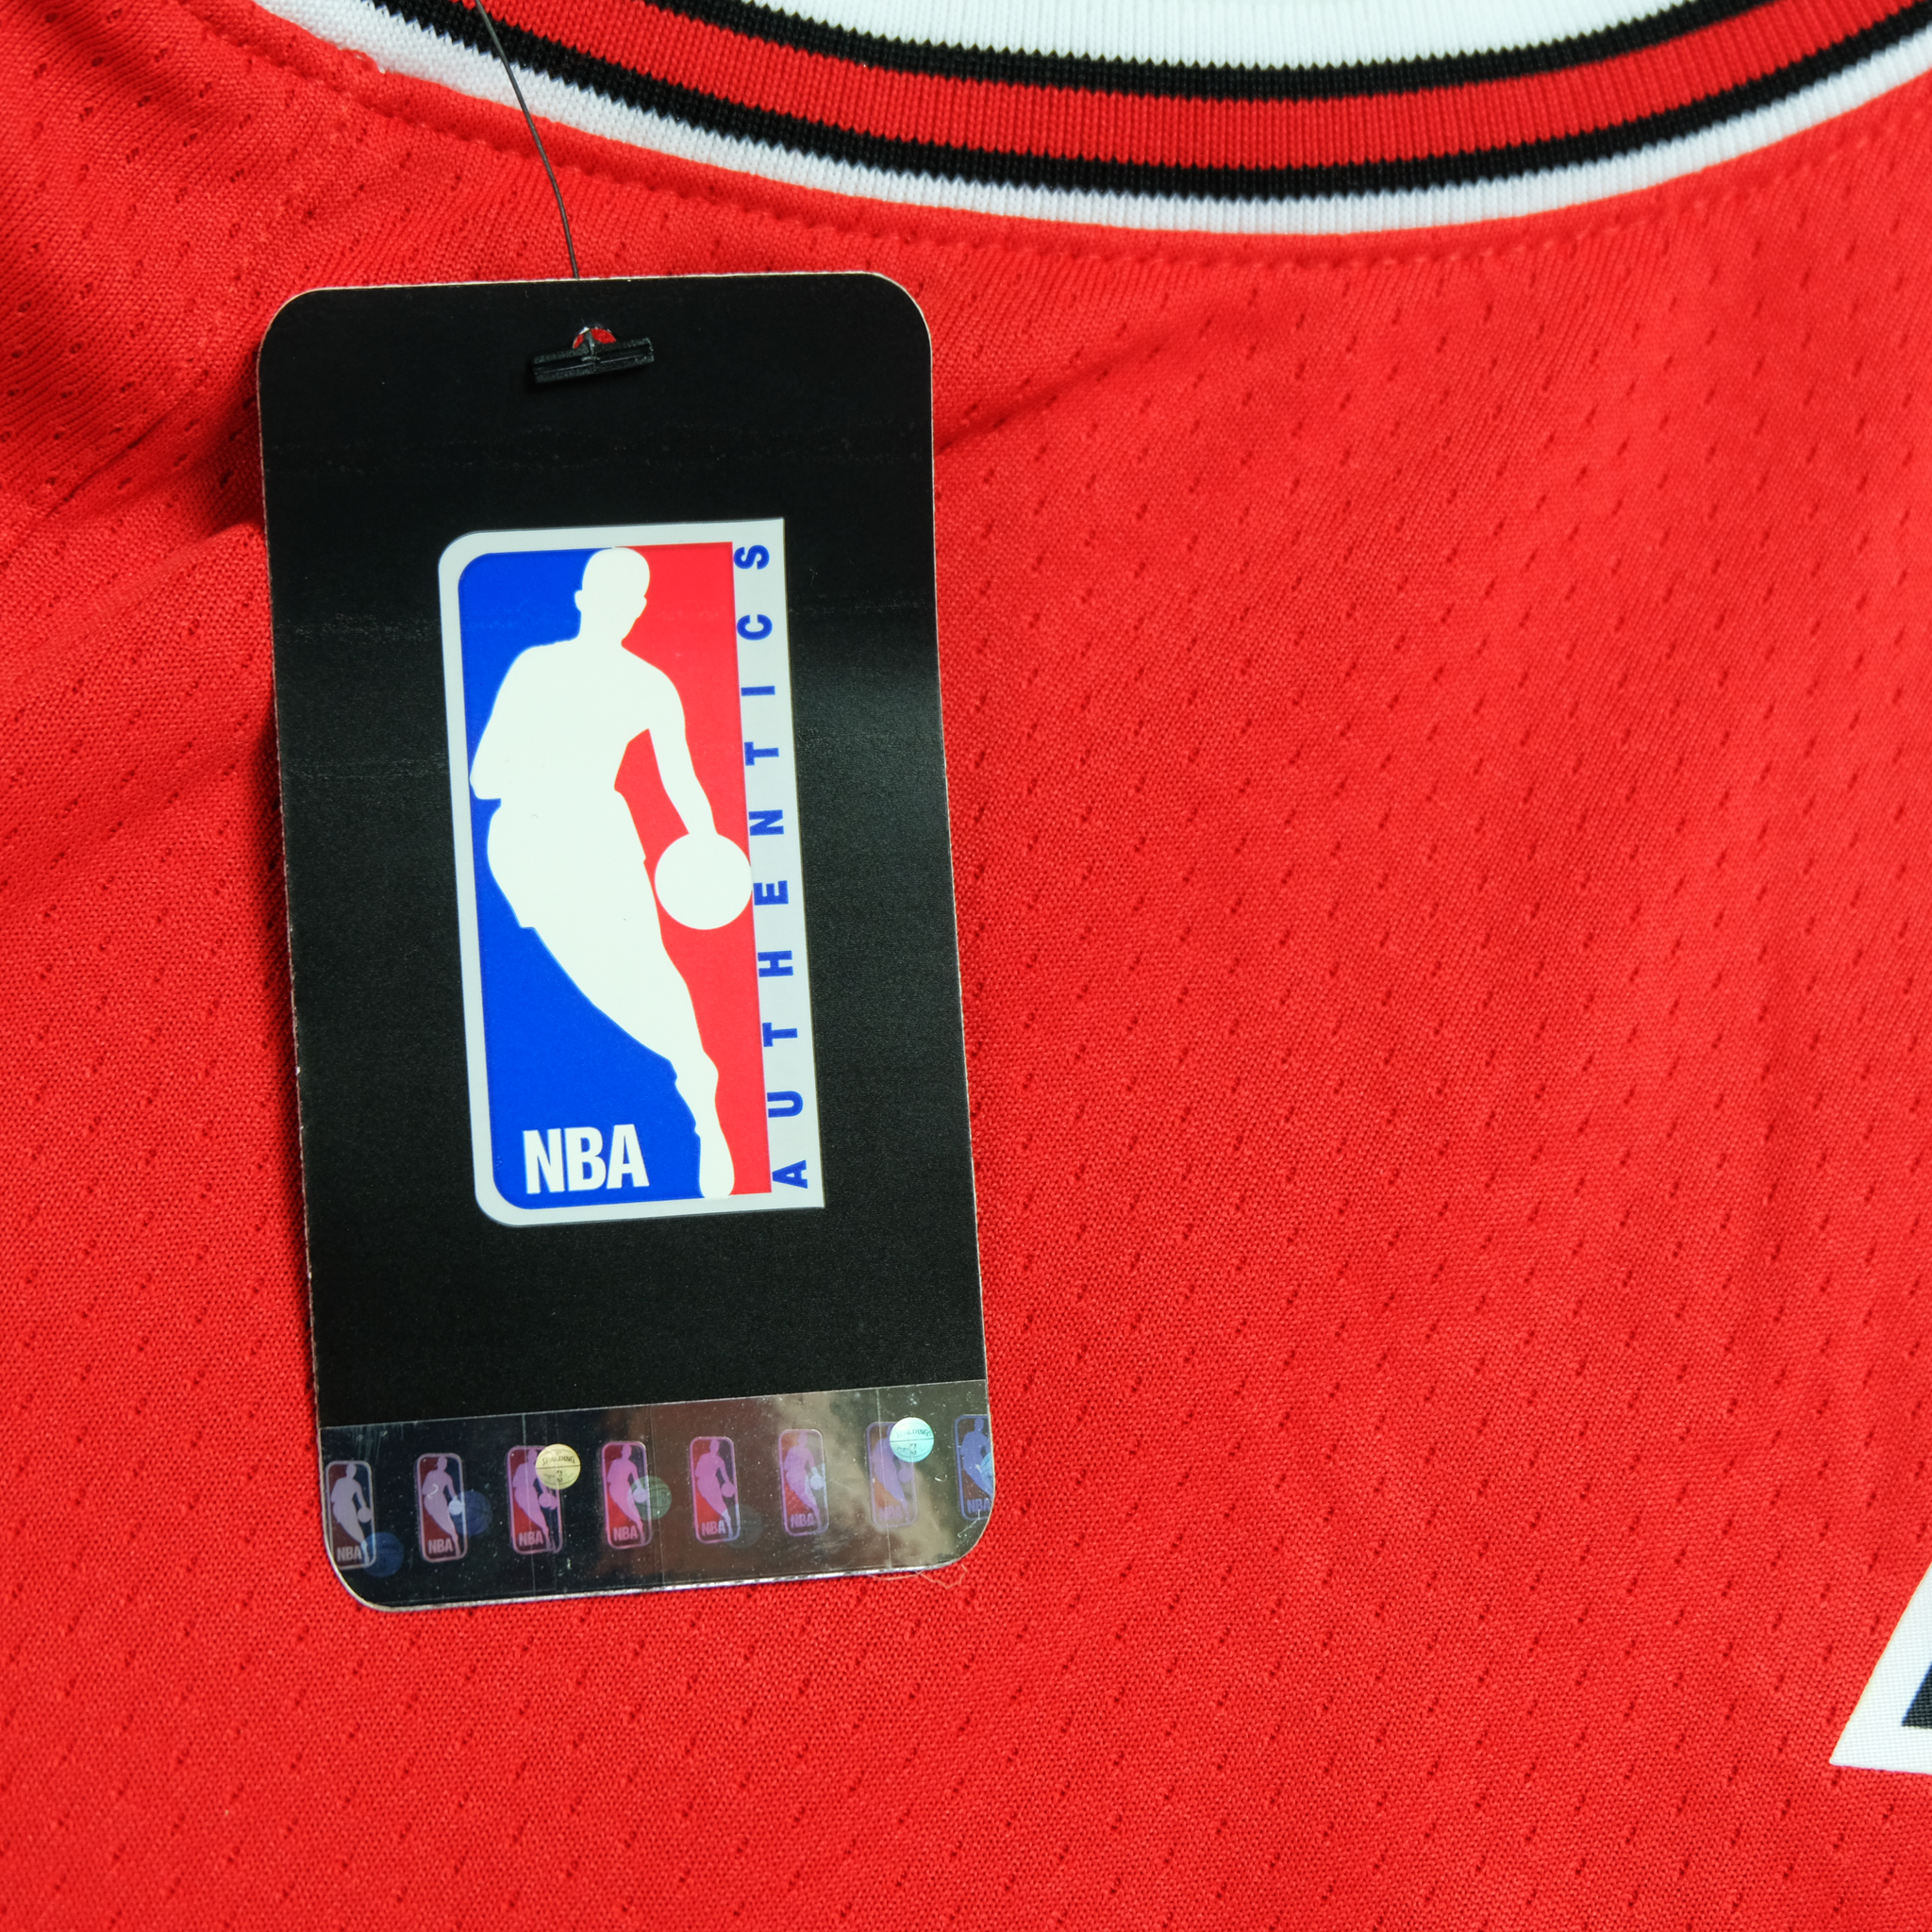 Michael Jordan's Bulls Jersey Returns with NikeConnect Technology